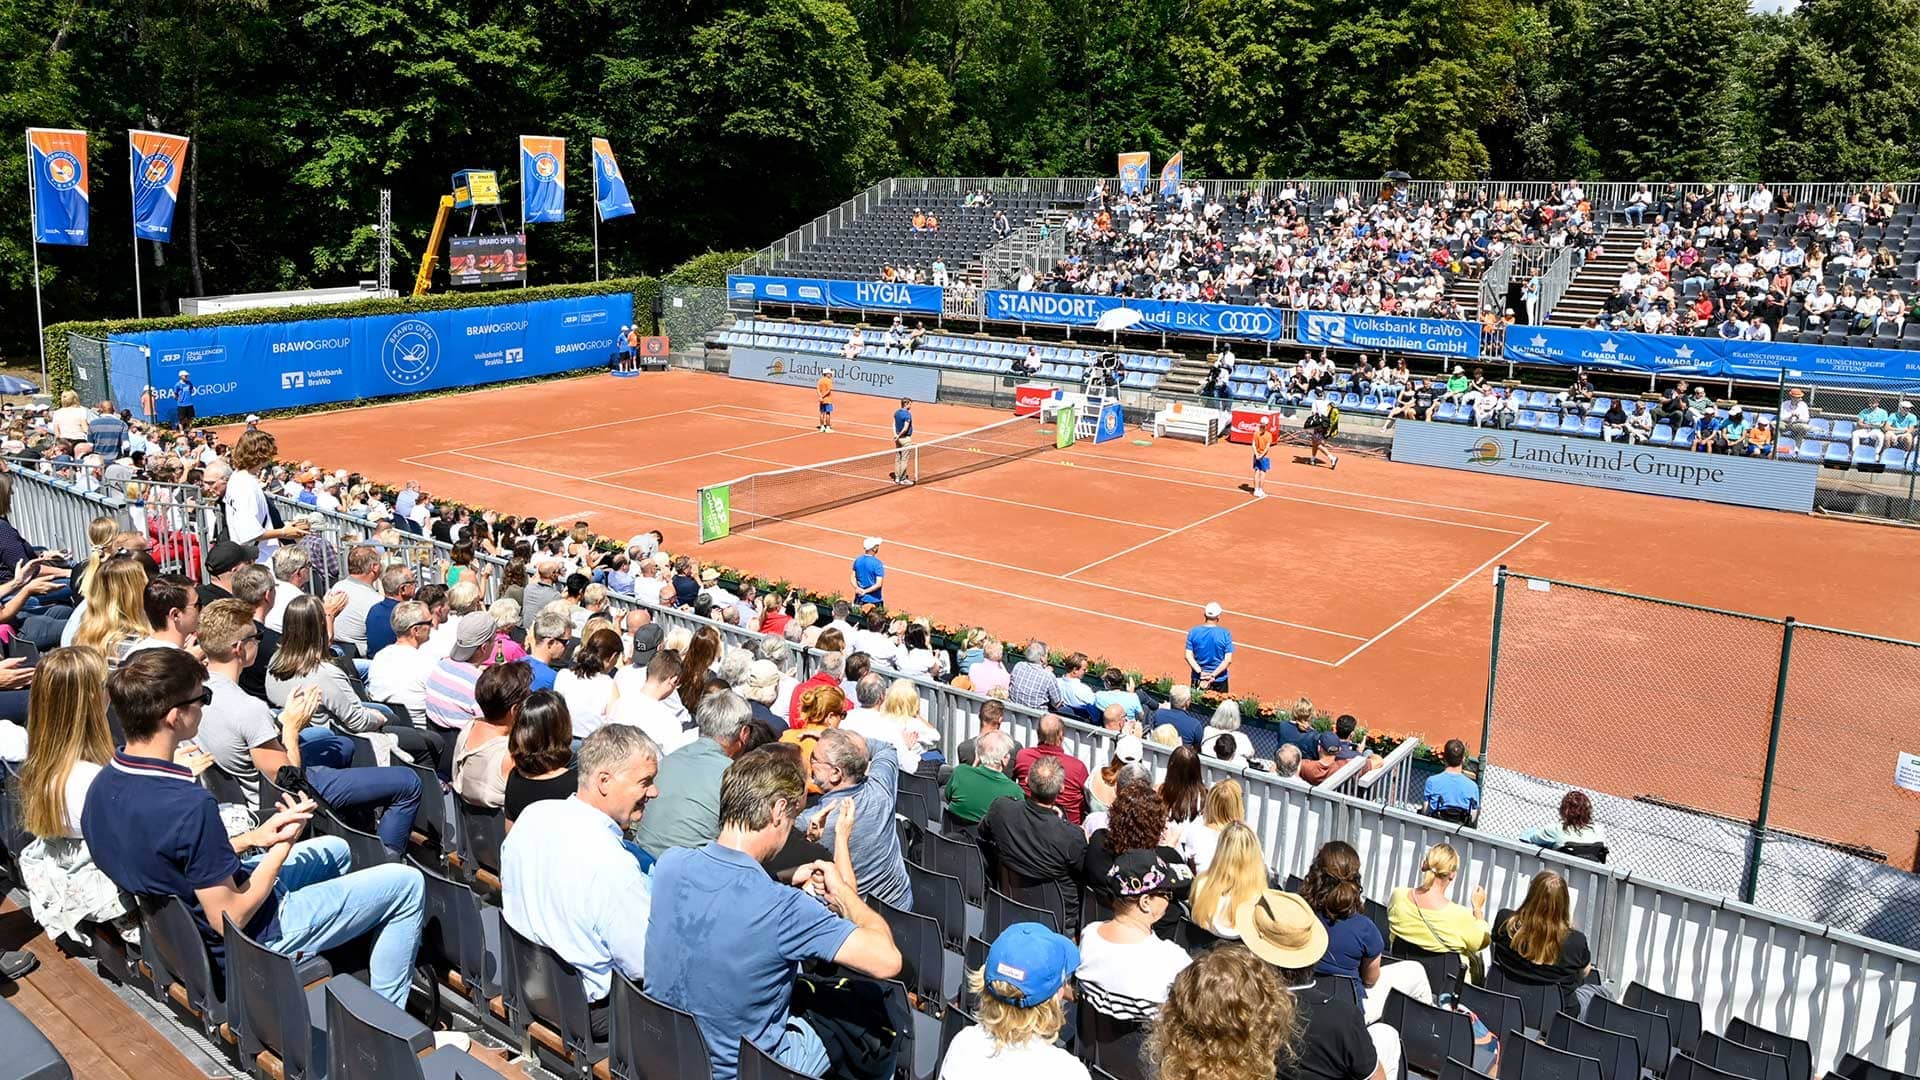 Brawo Open BRAWO Center Court Franco Agamenone (ITA) vs 5 Pavel Kotov (RUS) Challenger Tour Challenger TV ATP Tour Tennis